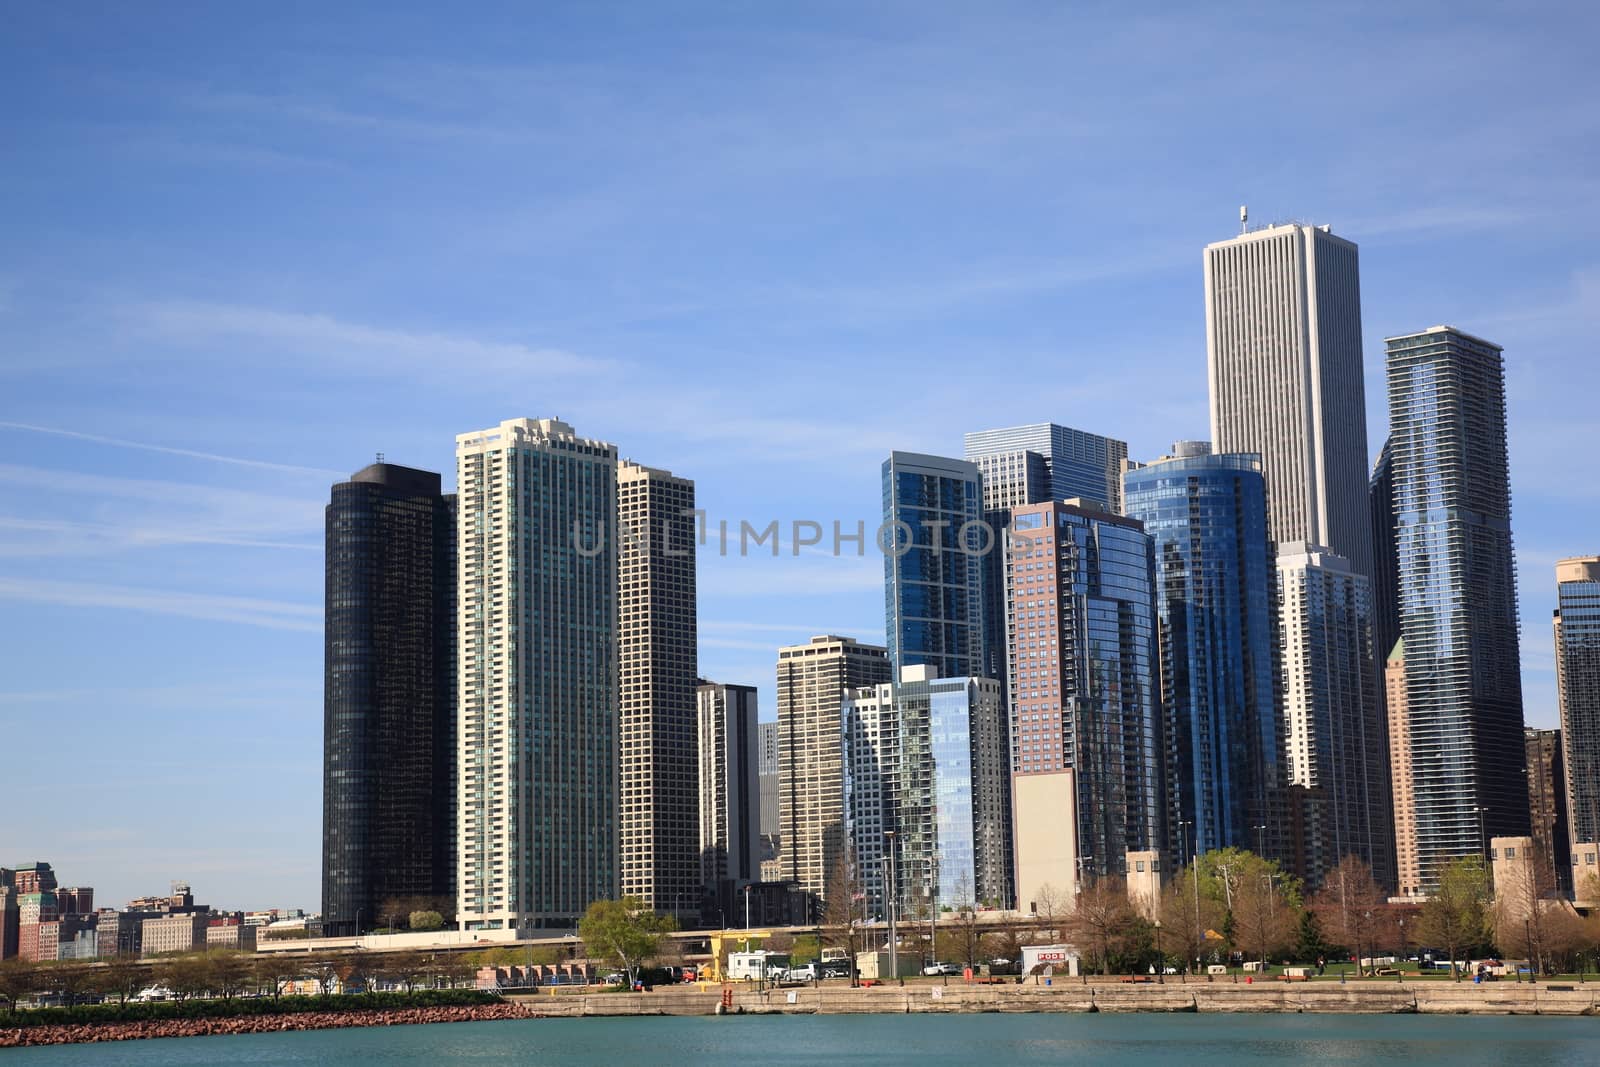 The Chicago skyline on Lake Michigan.